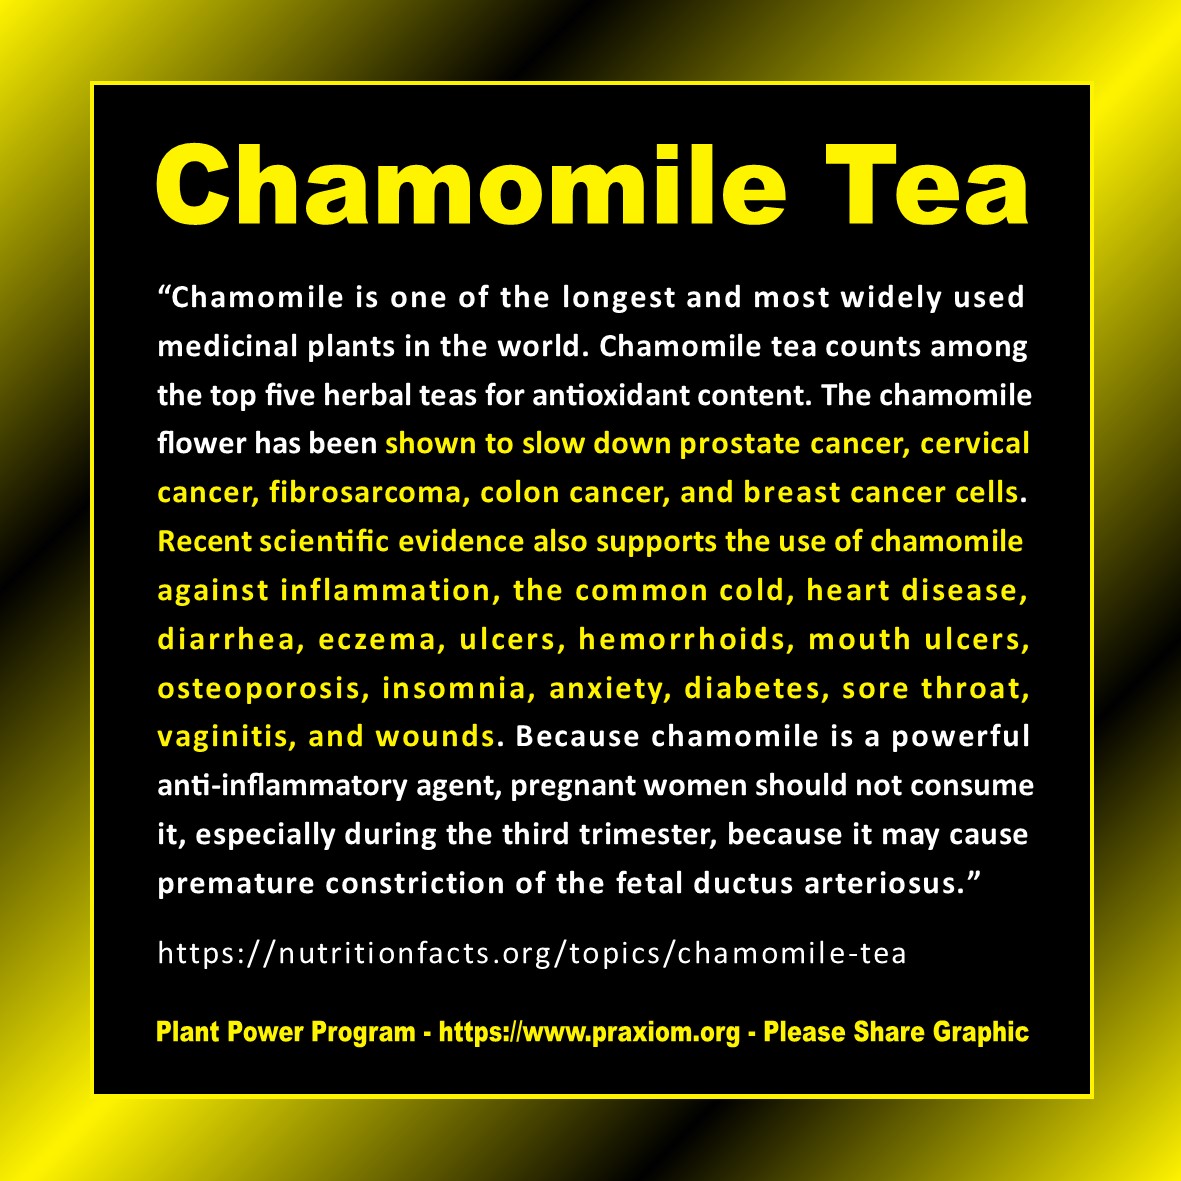 Chamomile Tea - Dr. Michael Greger